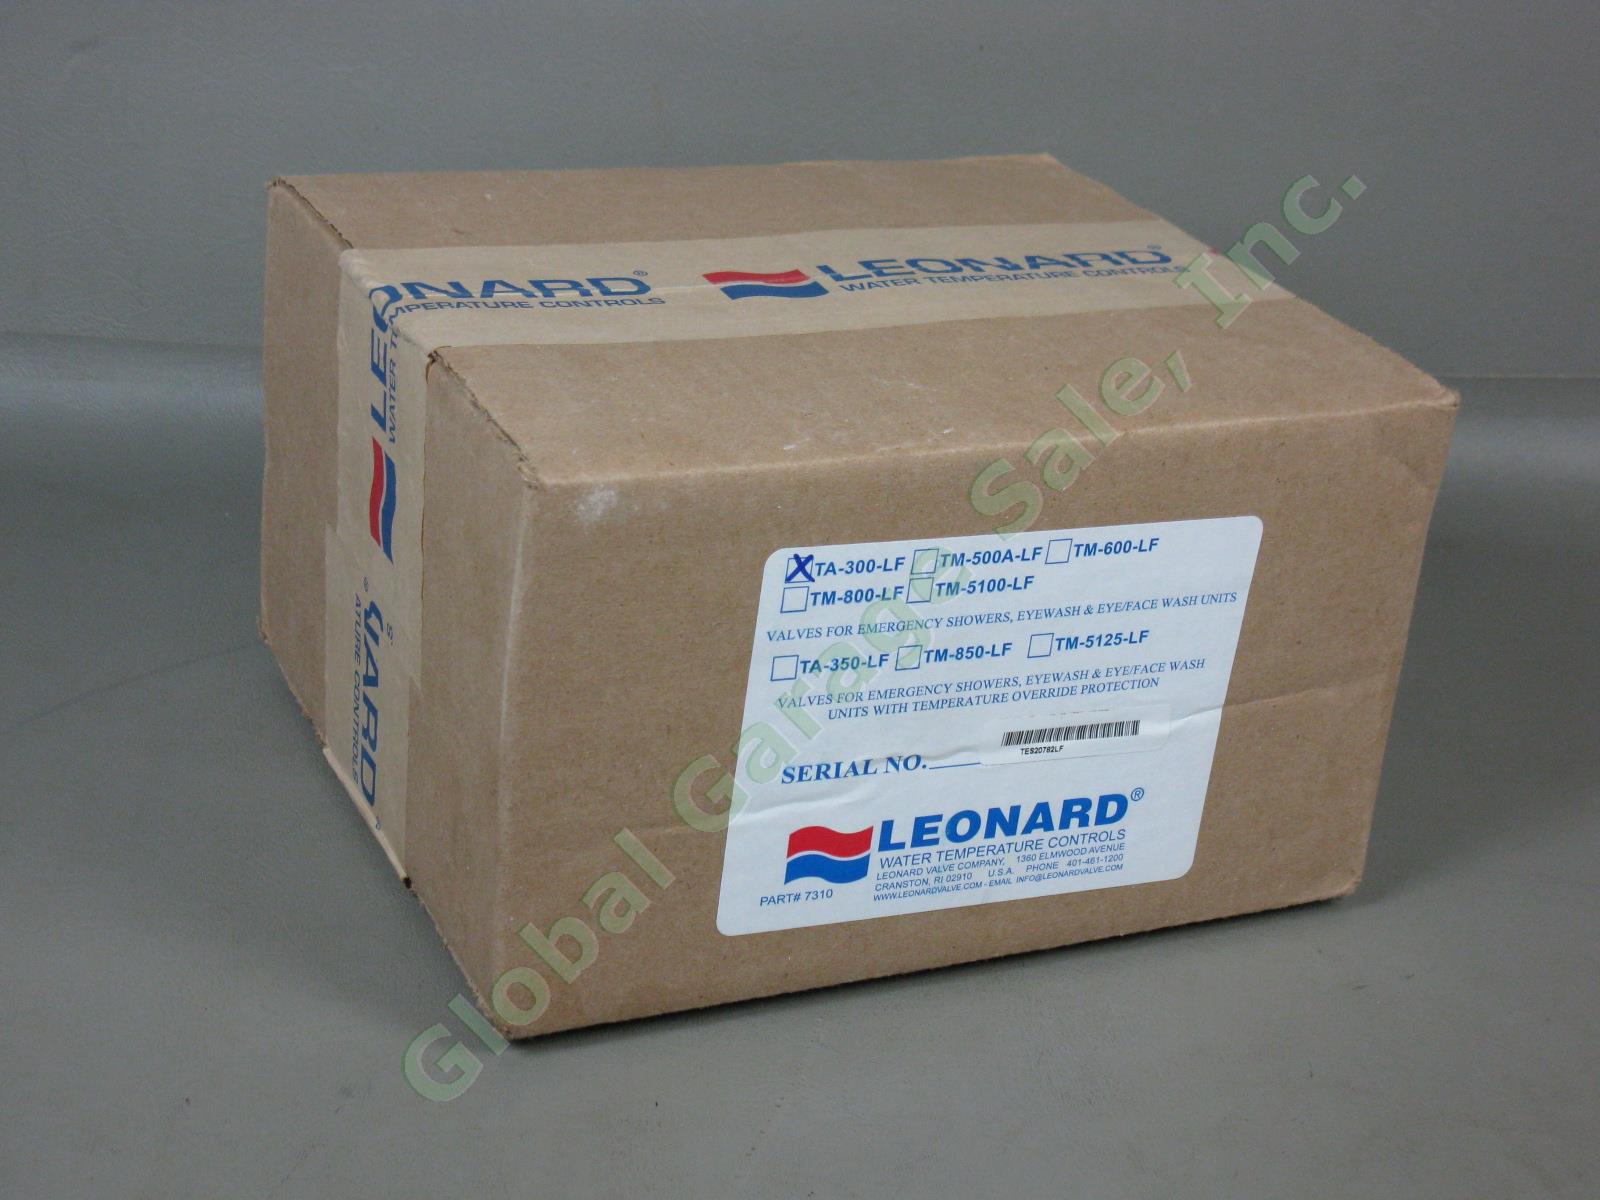 Leonard TA-300 LF Emergency Eye Face Water Wash Valve Temperature Protection NR